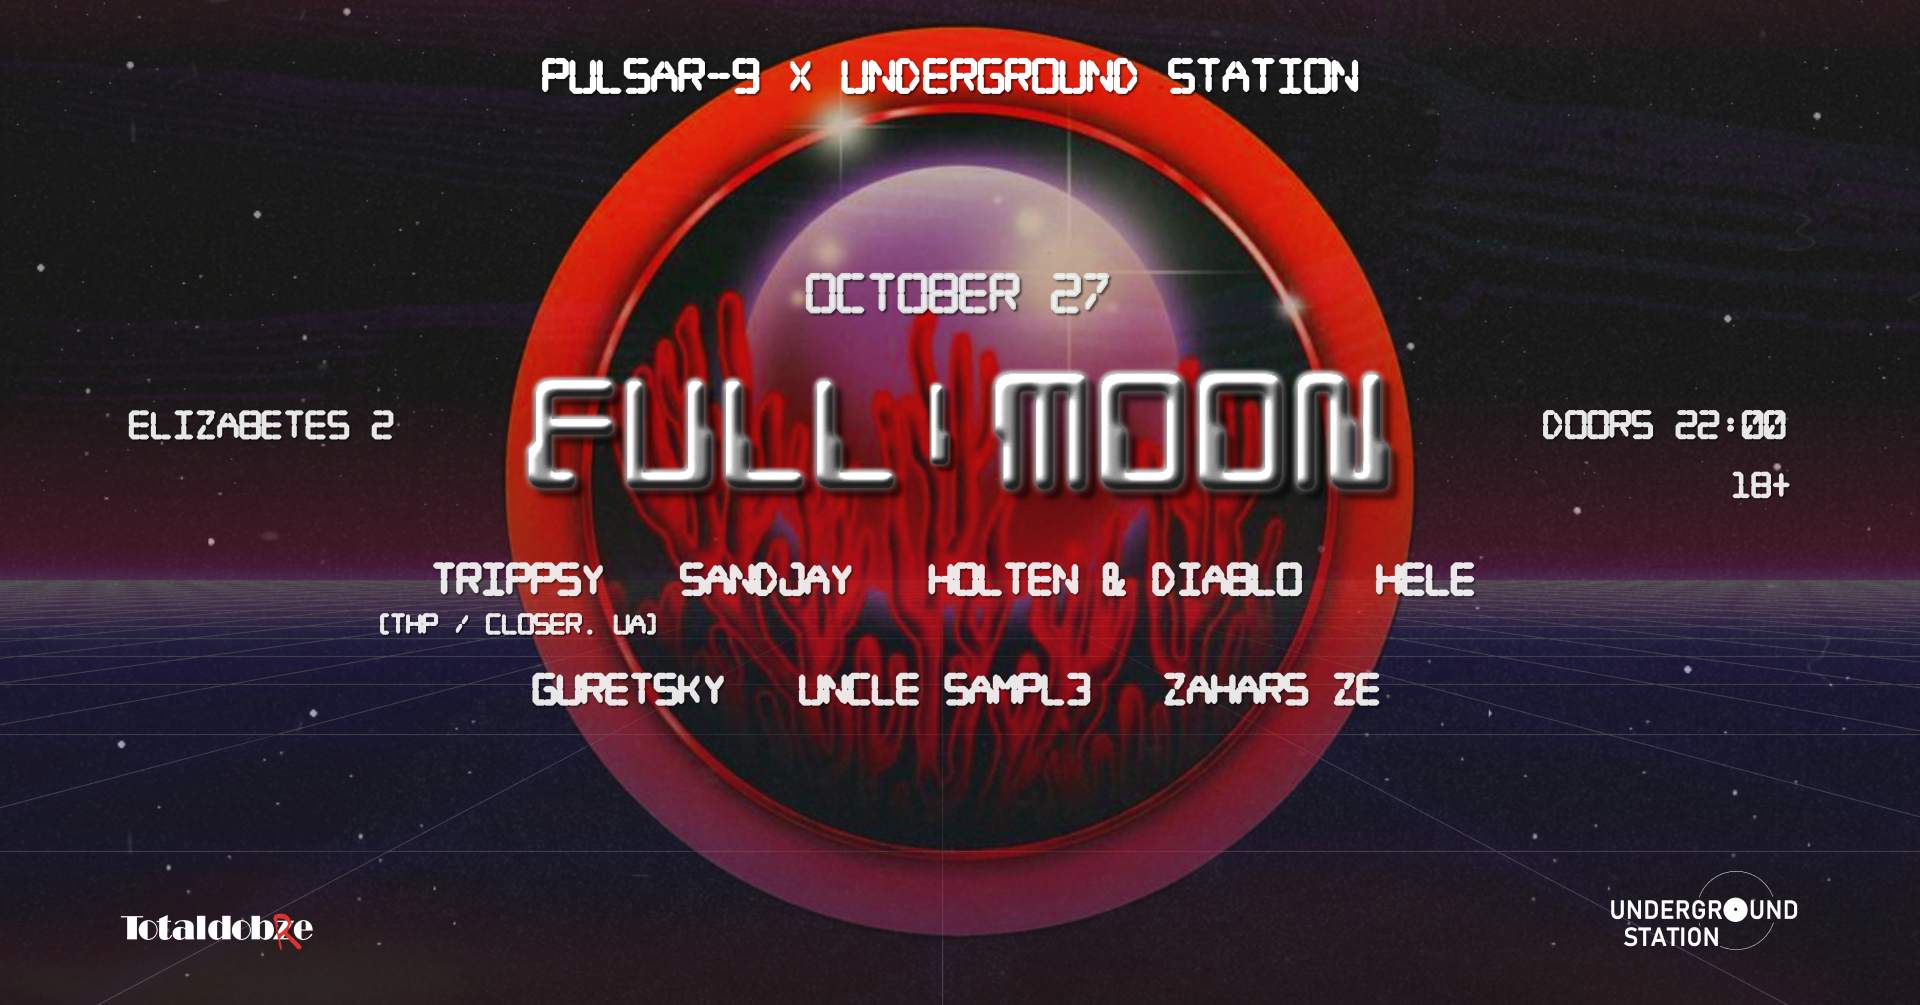 PULSAR 9 x Underground Station: FULL MOON with Trippsy - フライヤー表